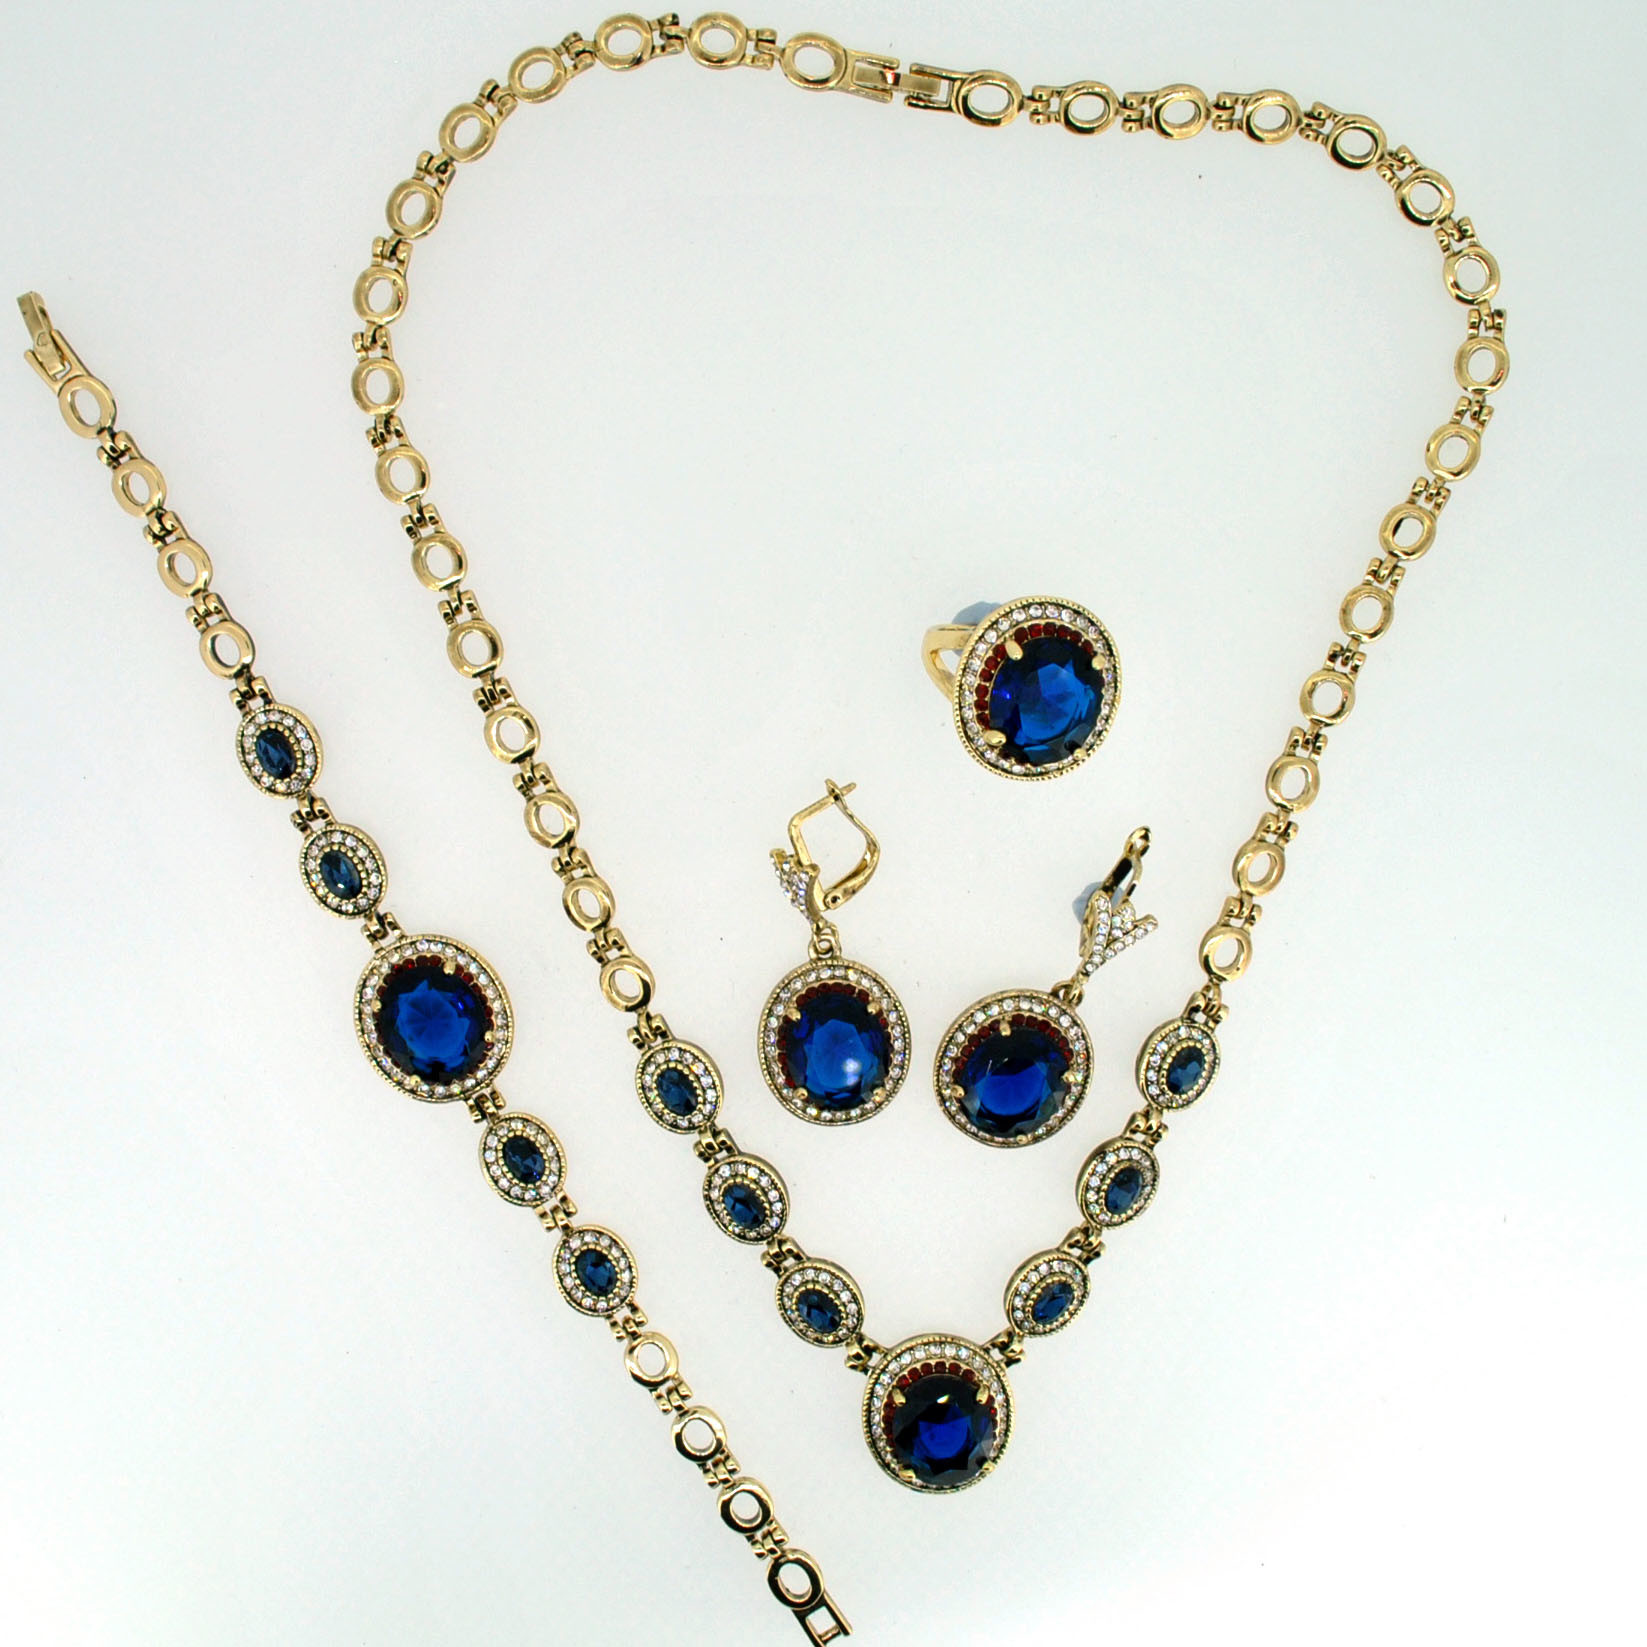 Dark Cooper Plating Antique Fashion Jewelry Set with Big Blue Stone (M1A08813B1OG)